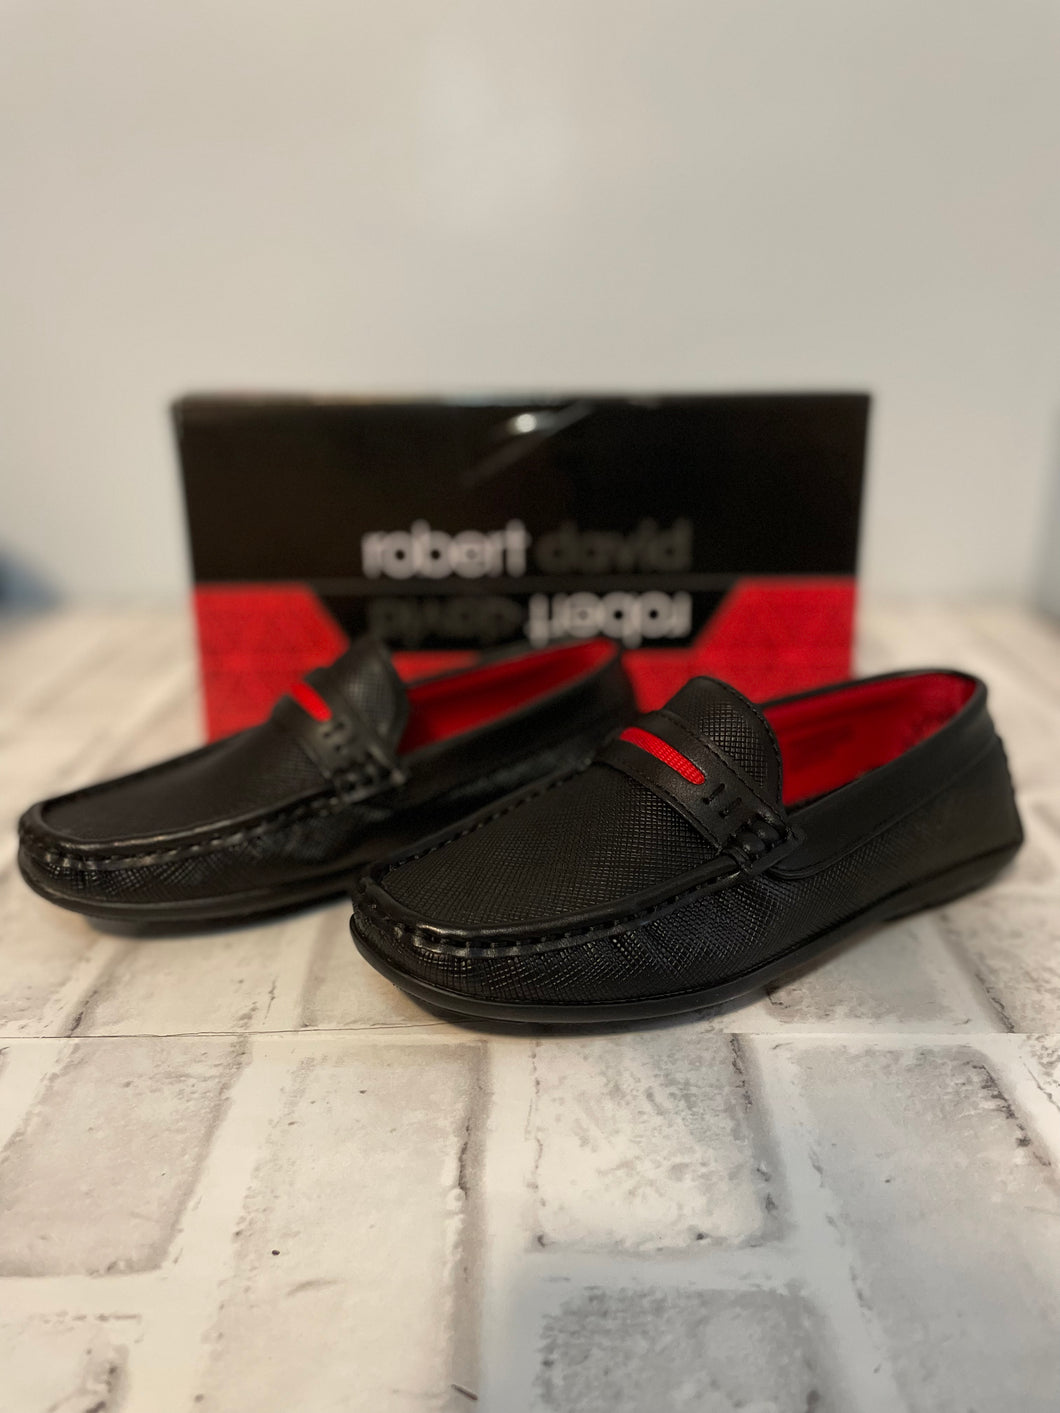 Robert David dress shoes, Size 1y